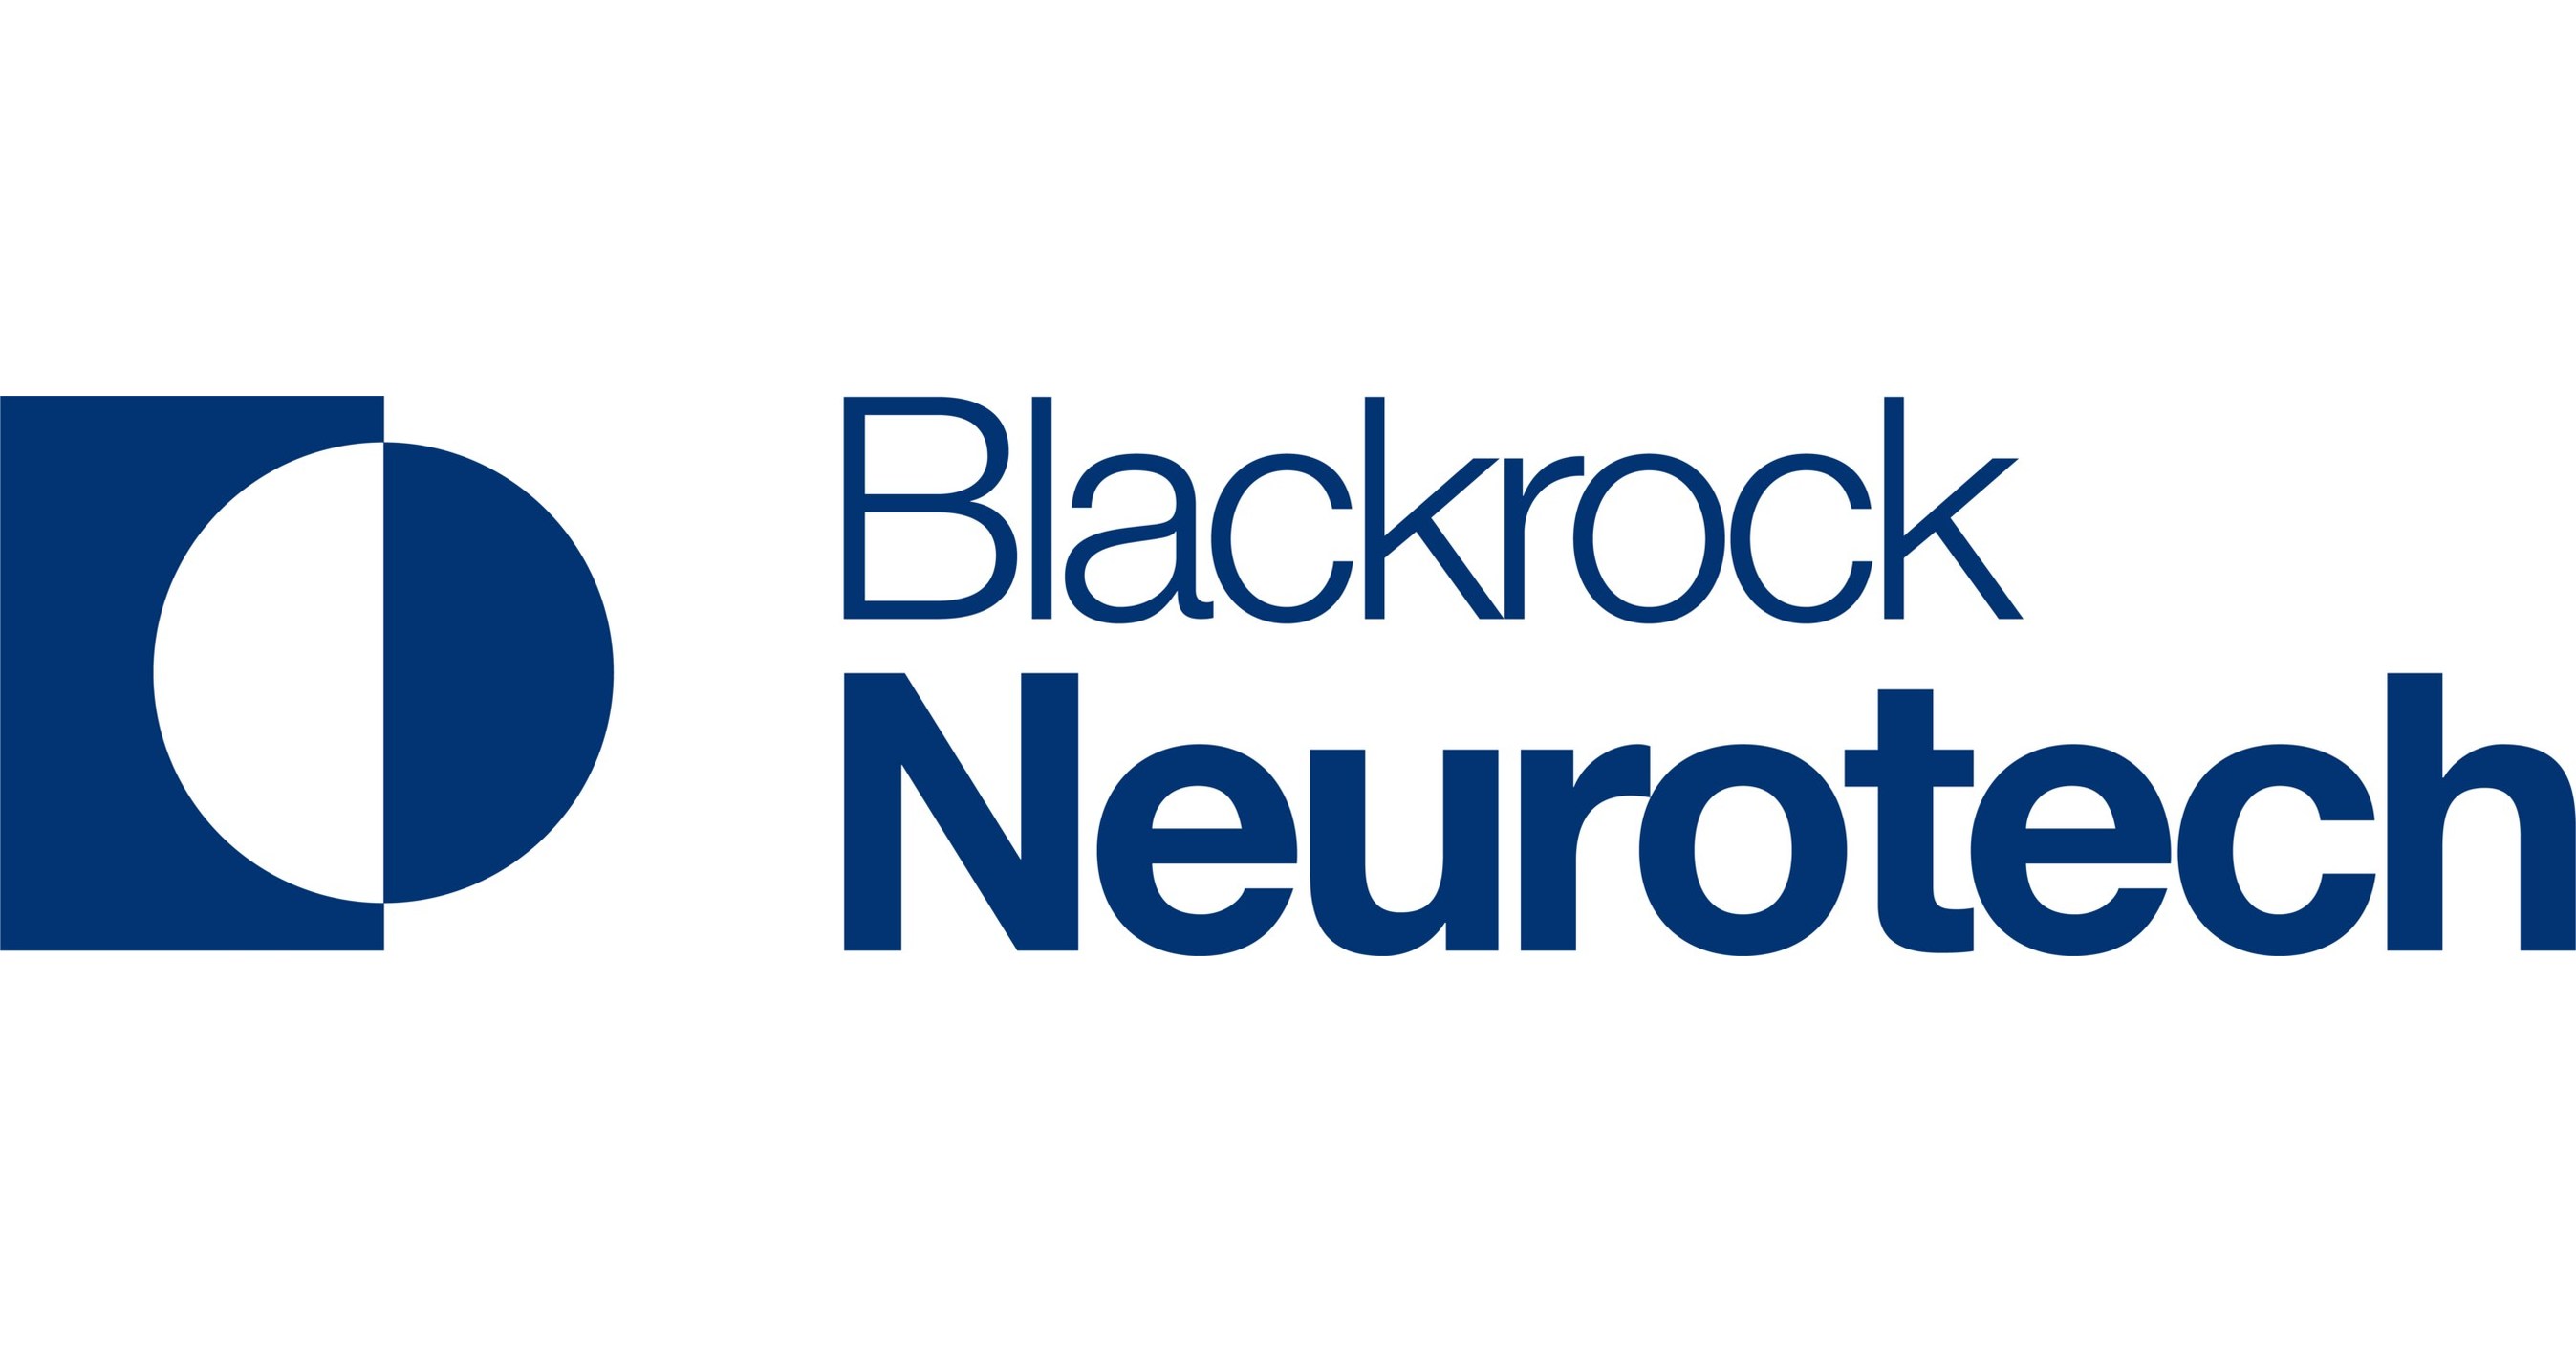 Blackrock Neurotech’s MoveAgain Brain-Computer Interface System Receives Breakthrough Device Designation from the FDA